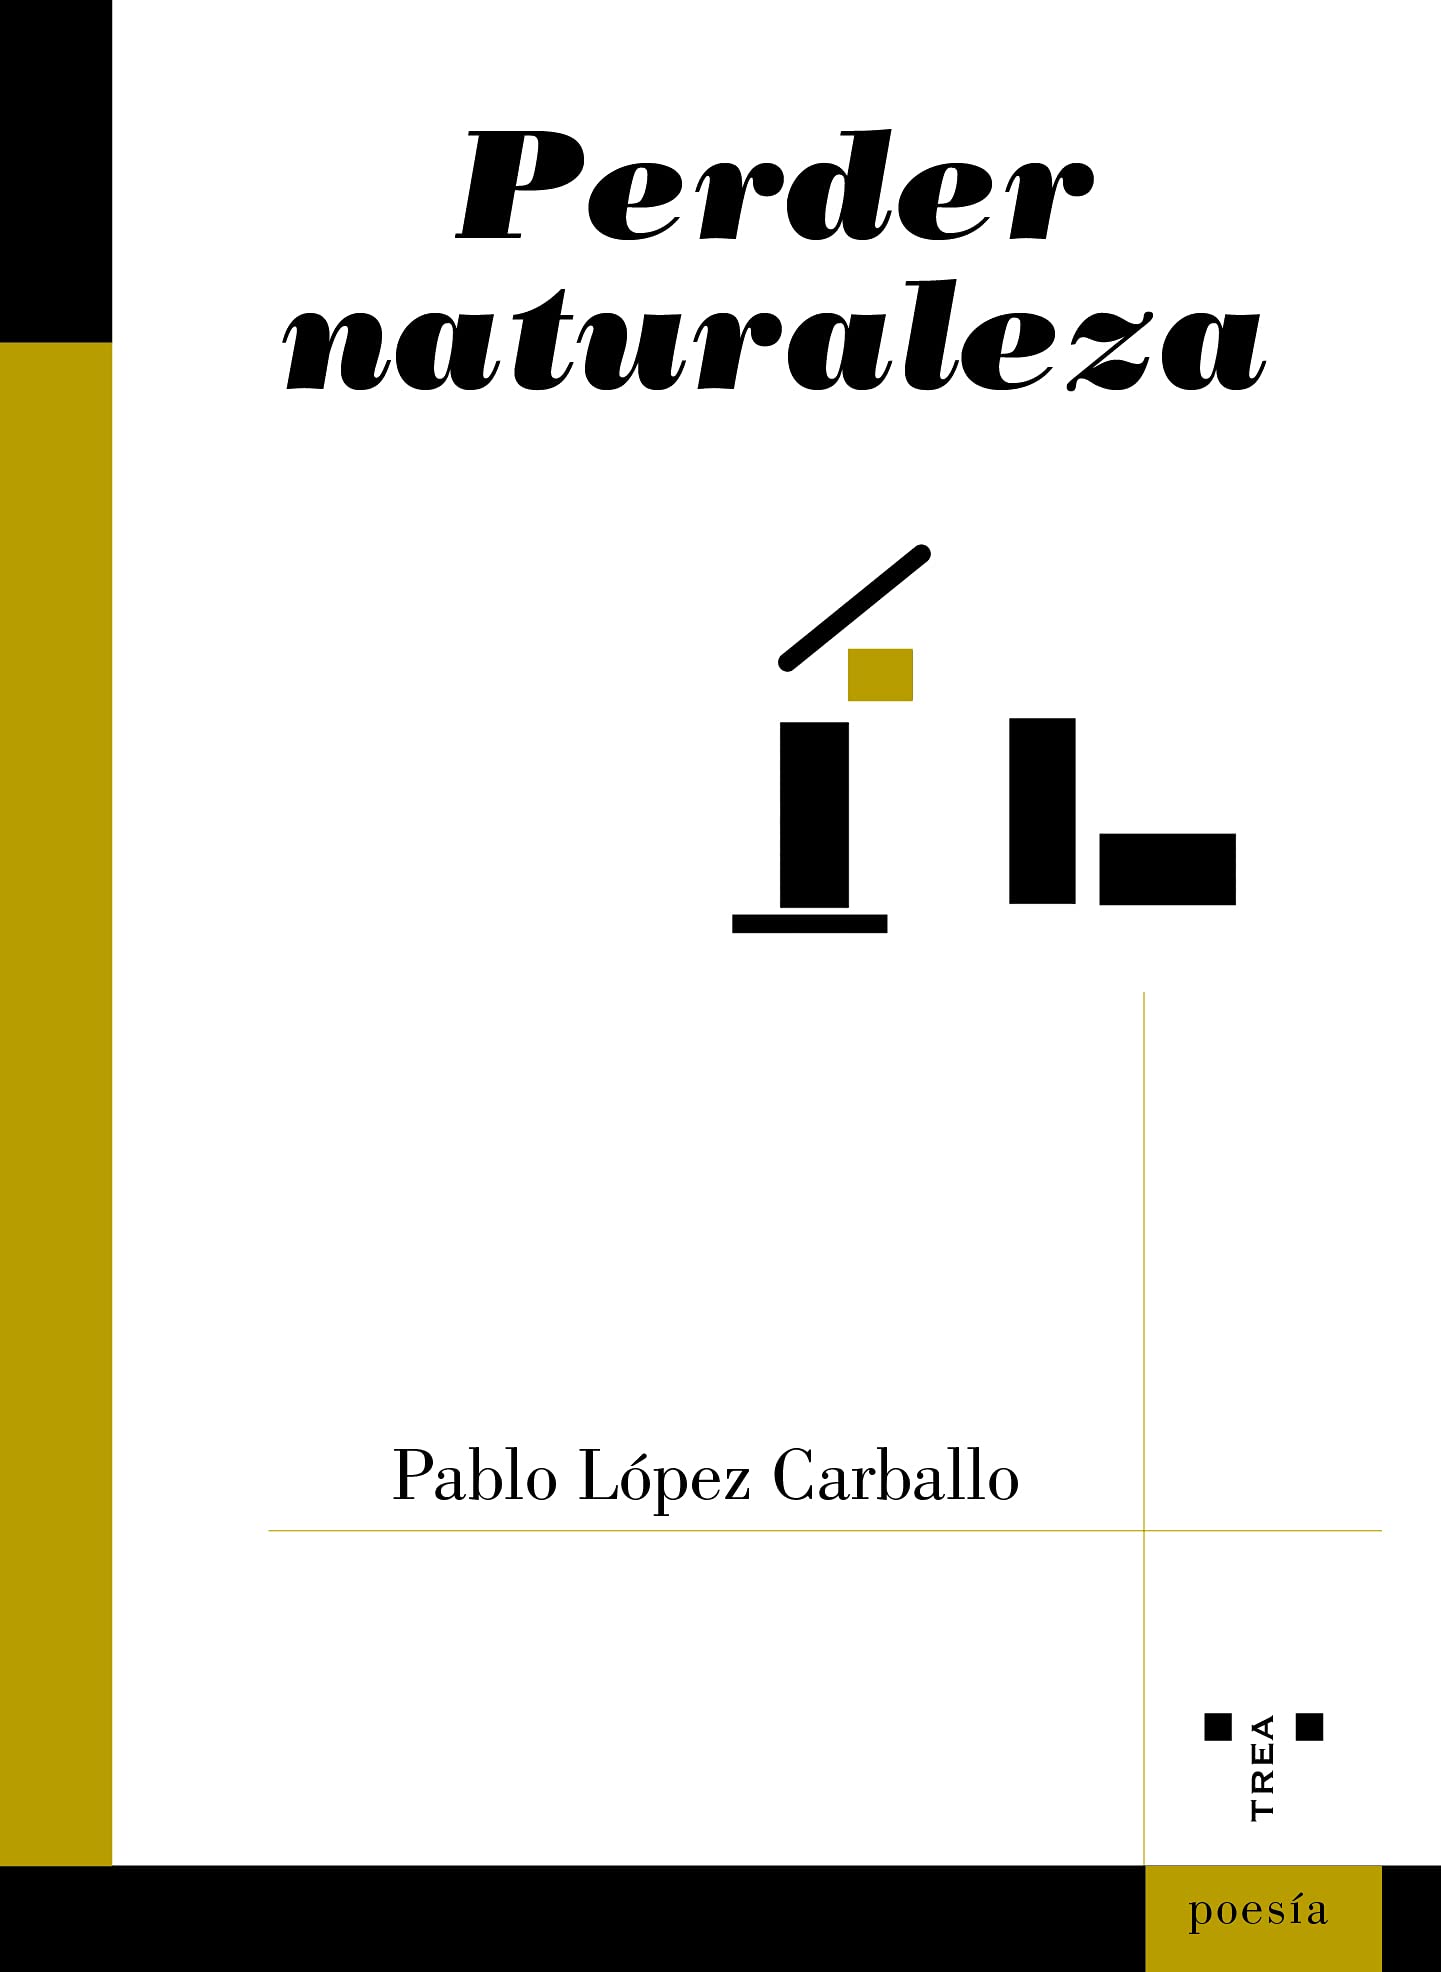 5 poemas de Perder naturaleza, de Pablo López Carballo